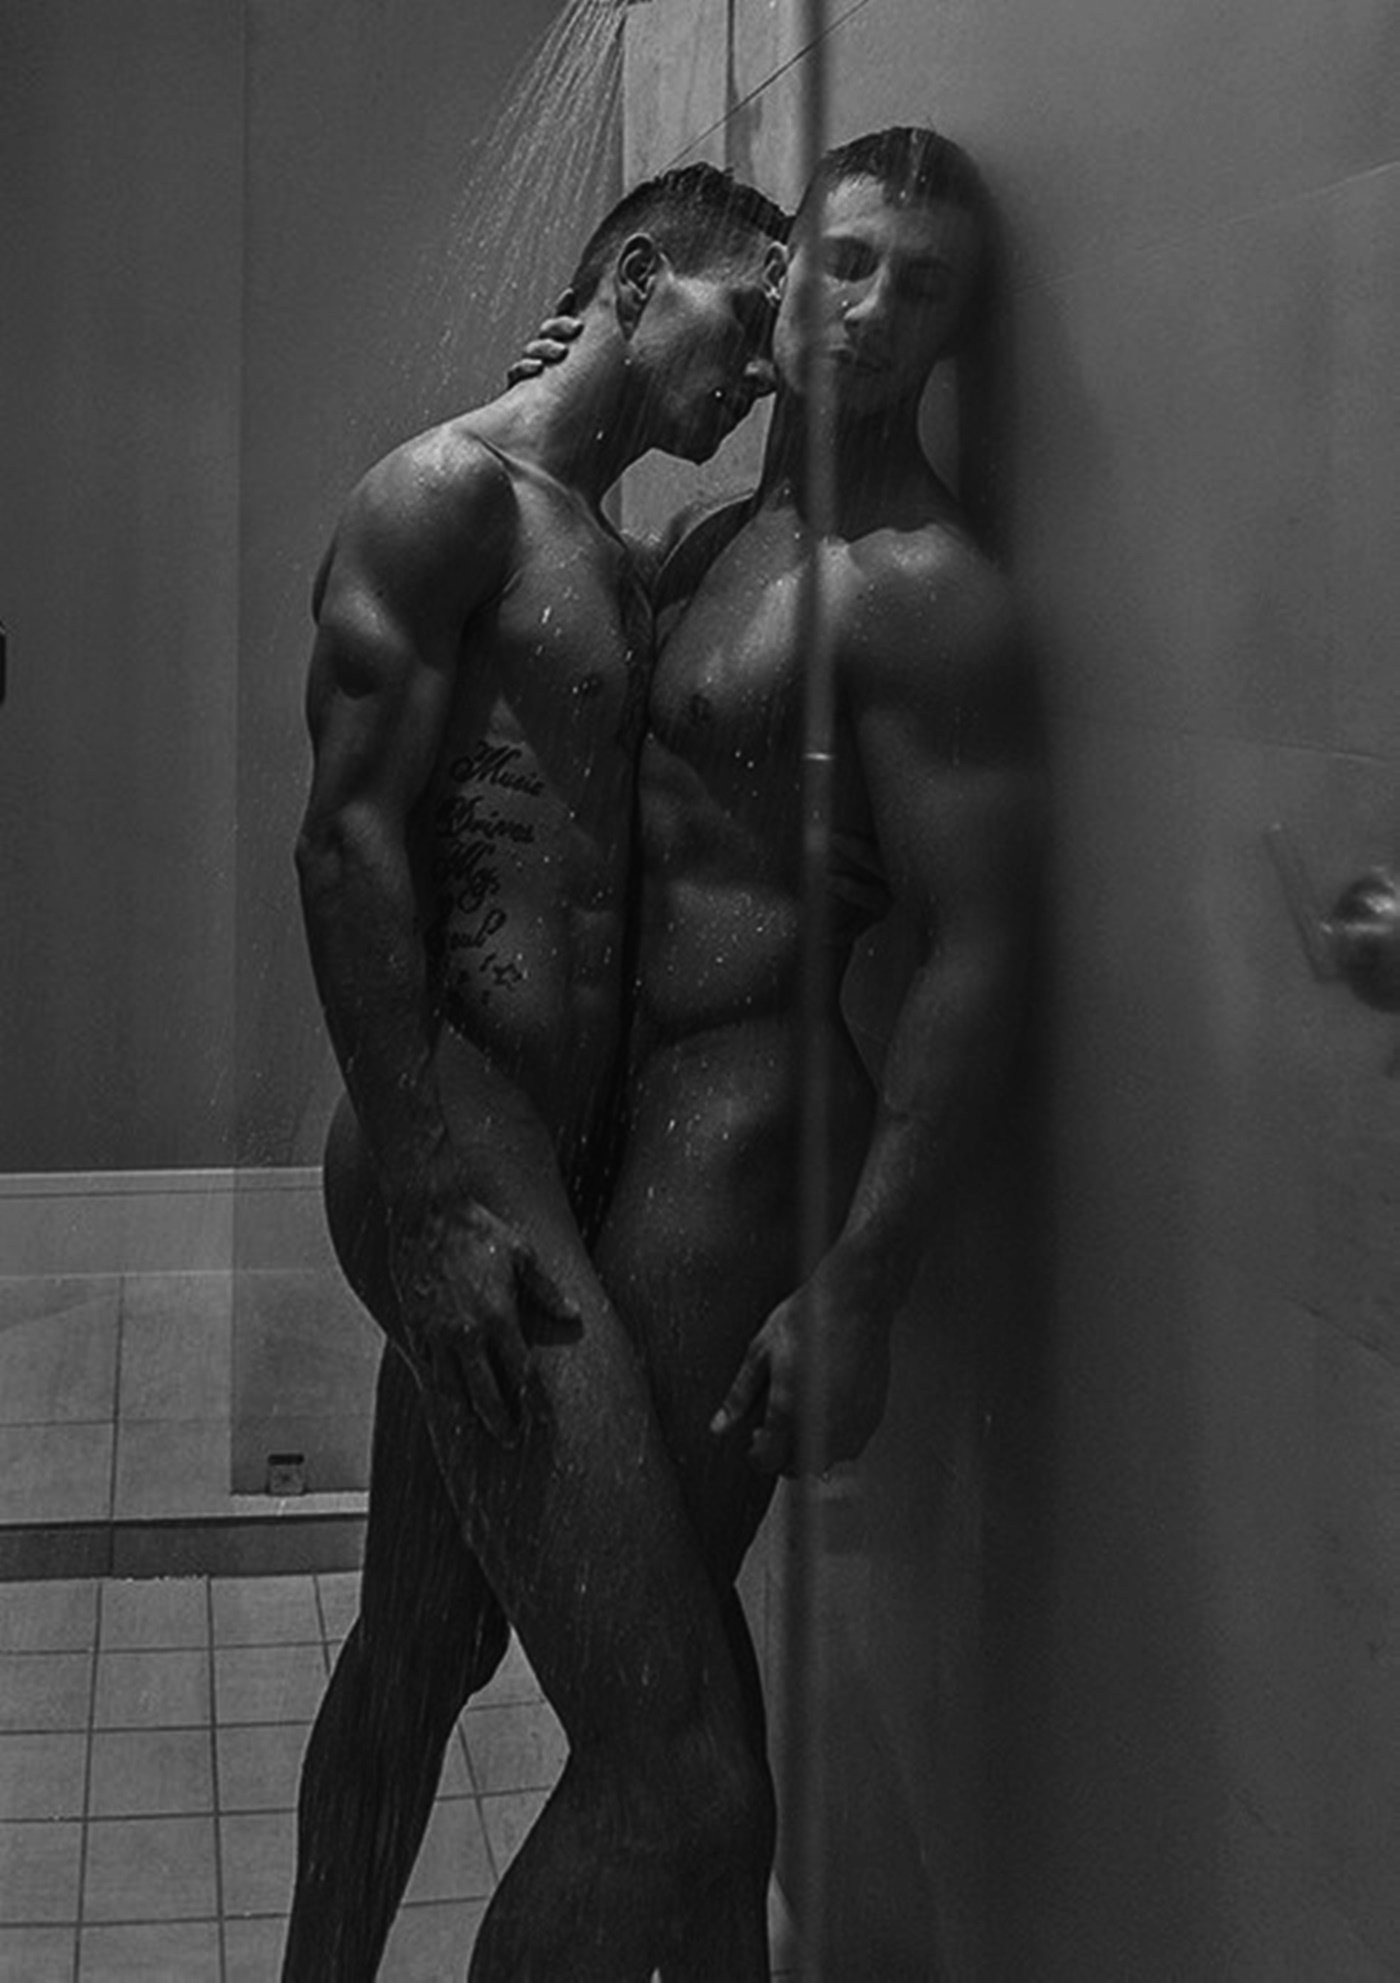 Men soweto in shower nude